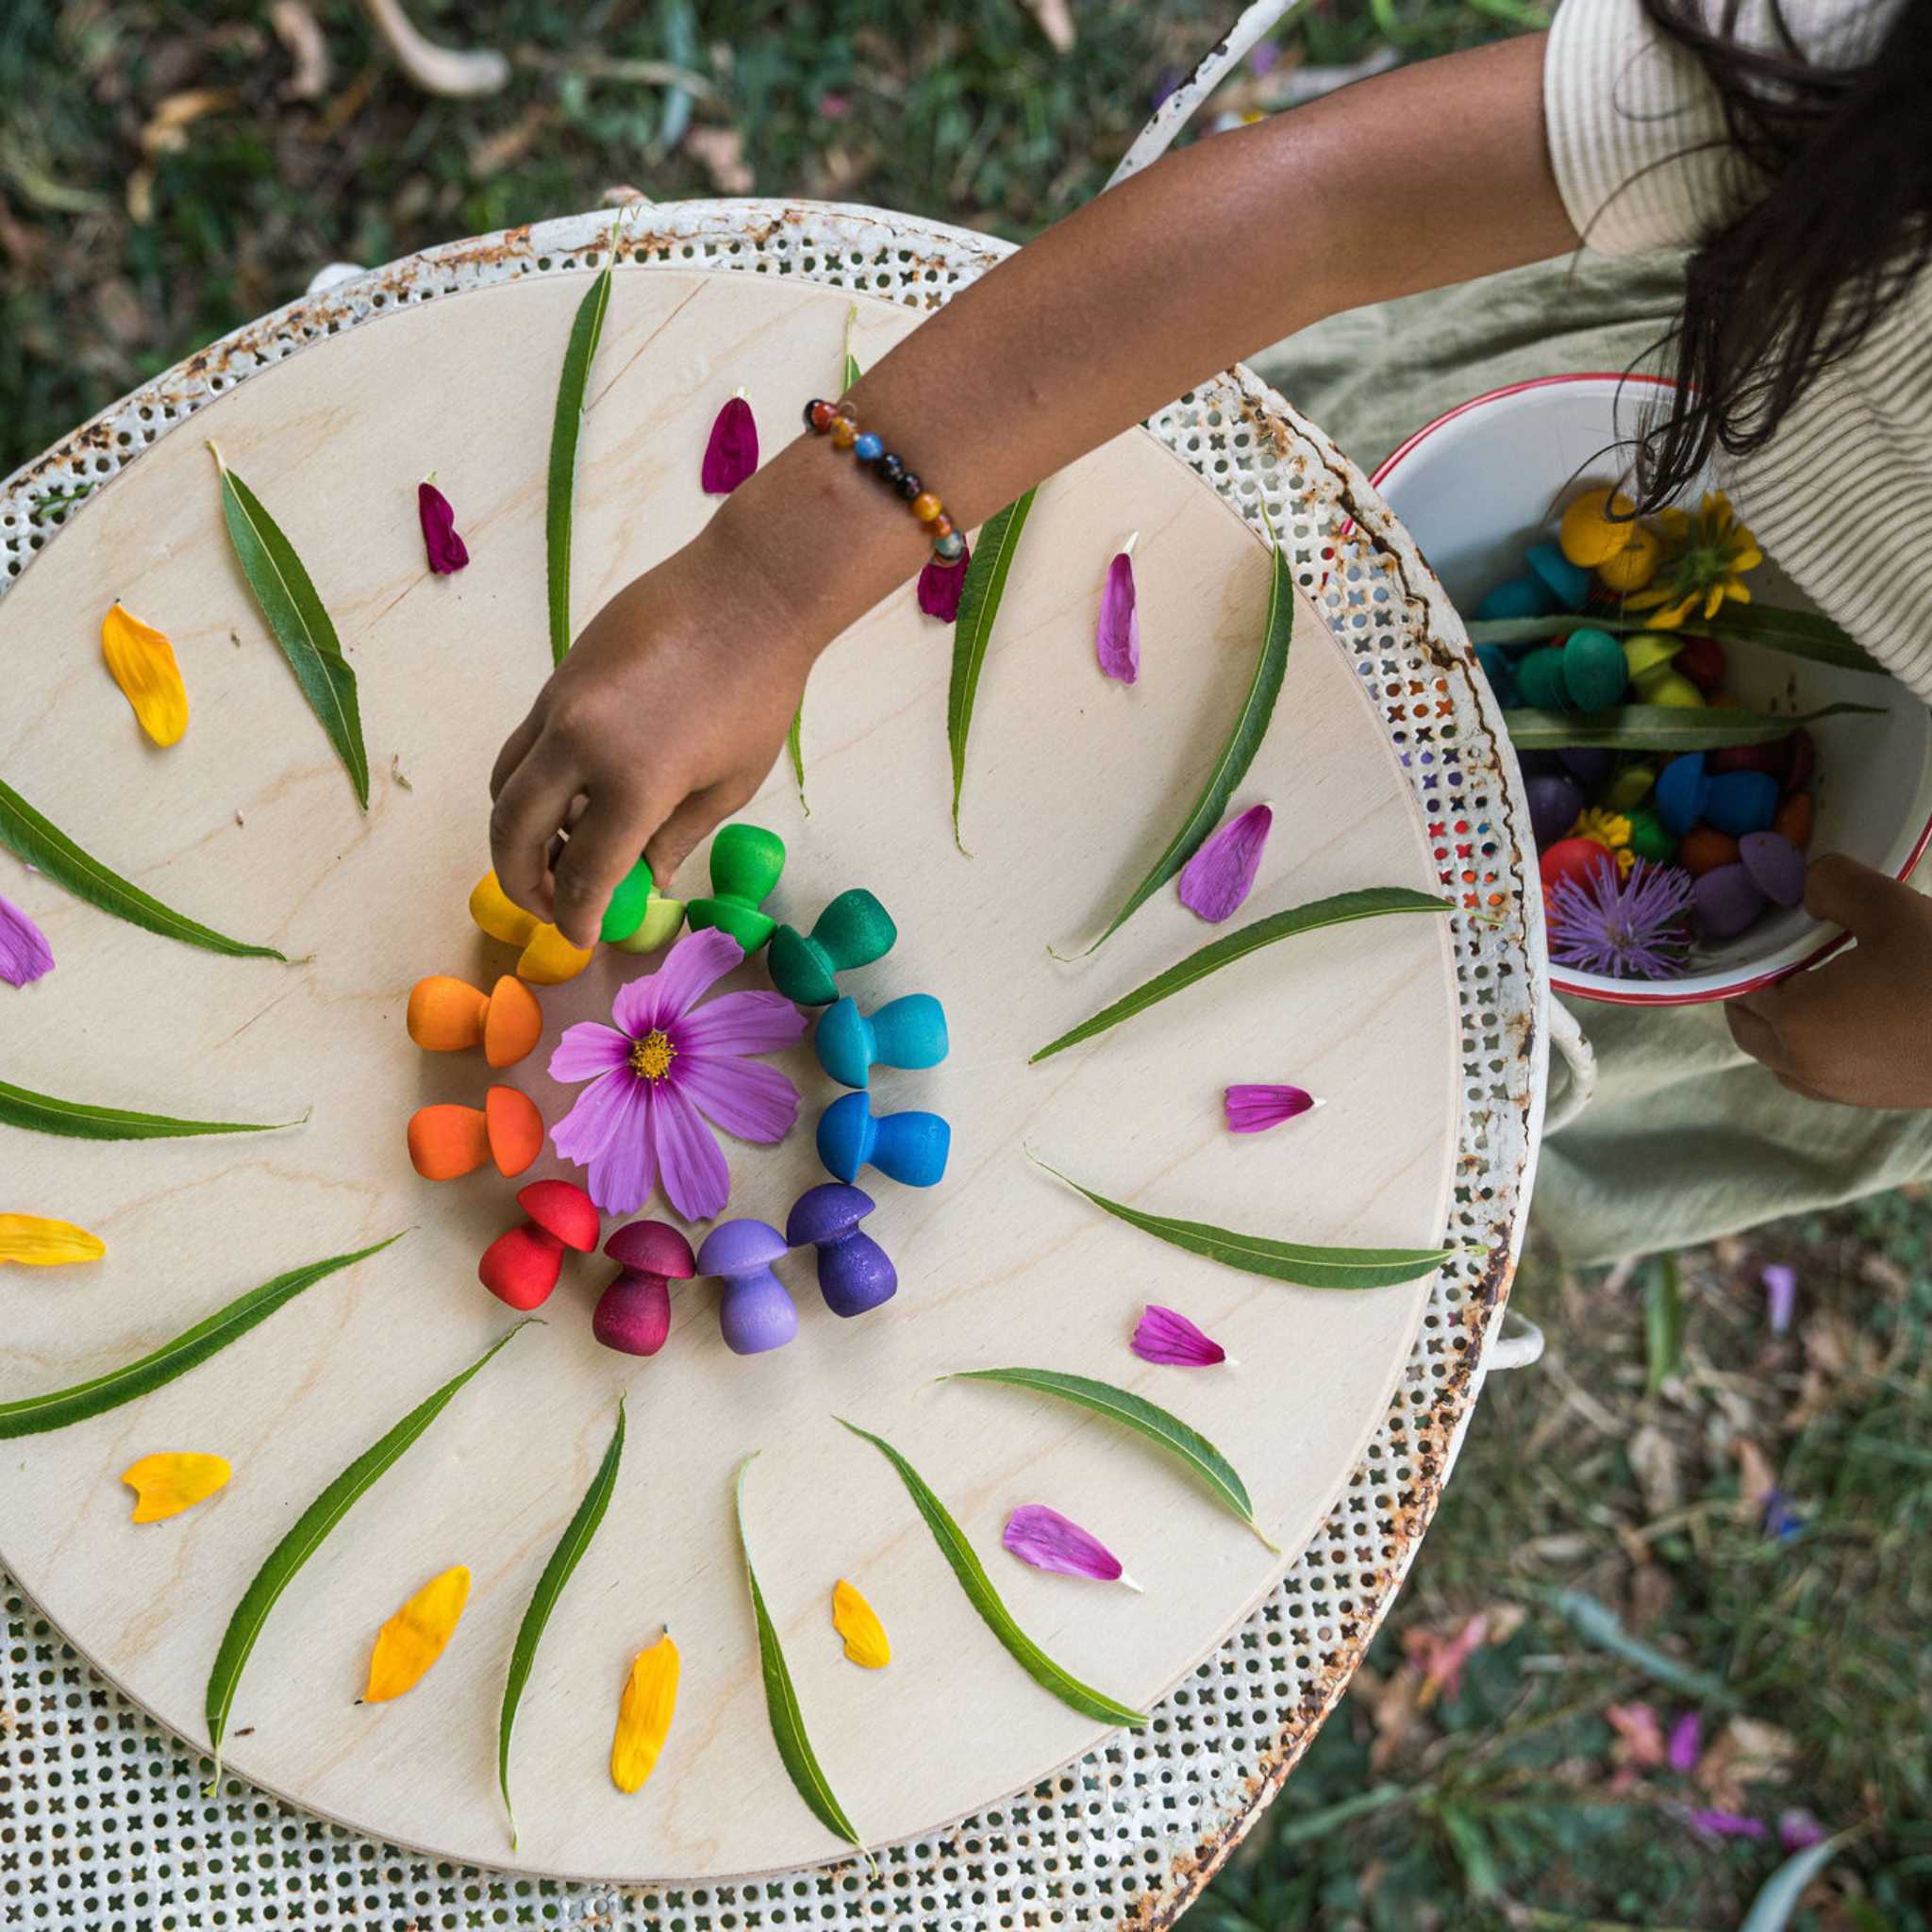 Little Girl Playing With Grapat 36 x Mandala Rainbow Mushrooms